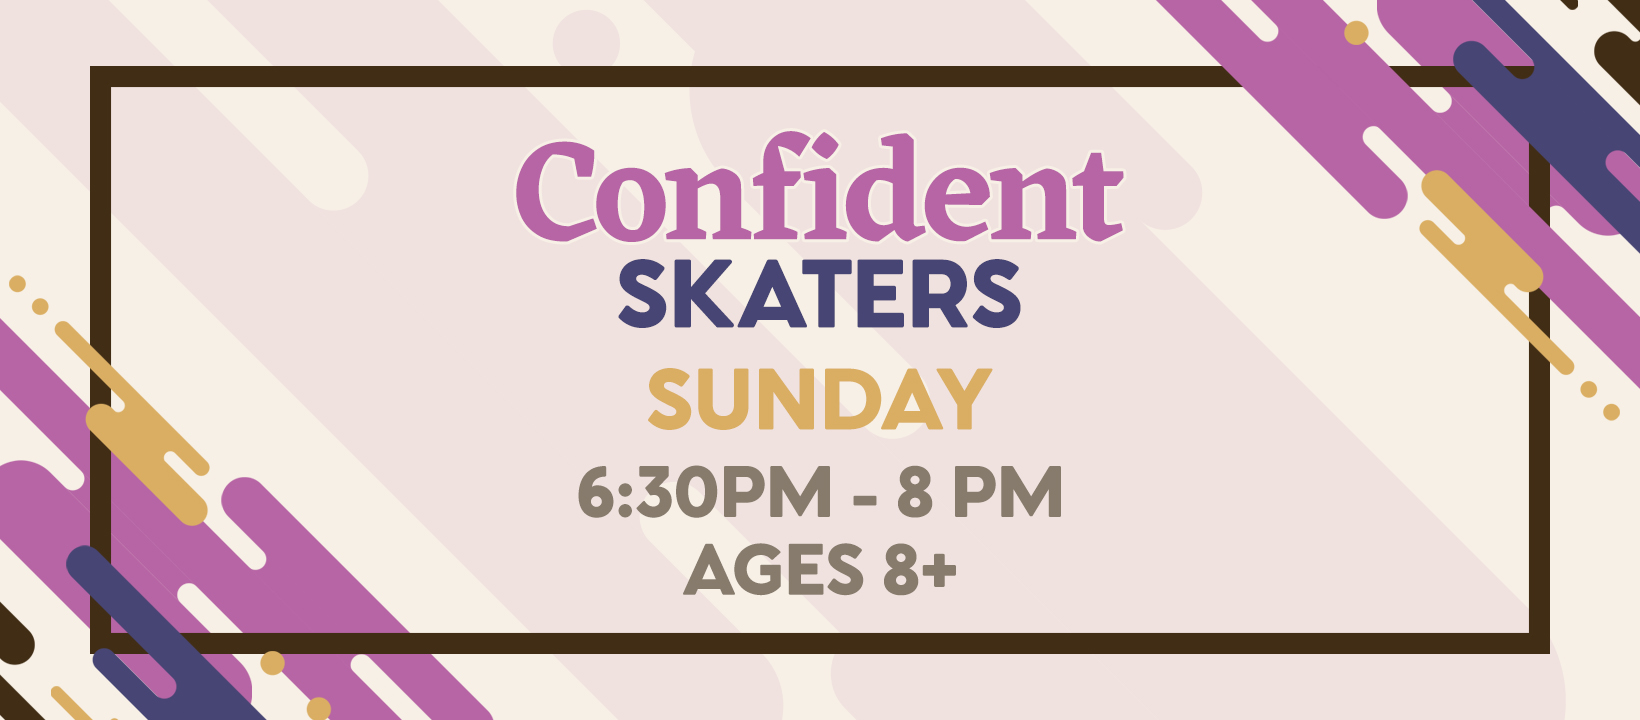 07 Confident Skaters 22